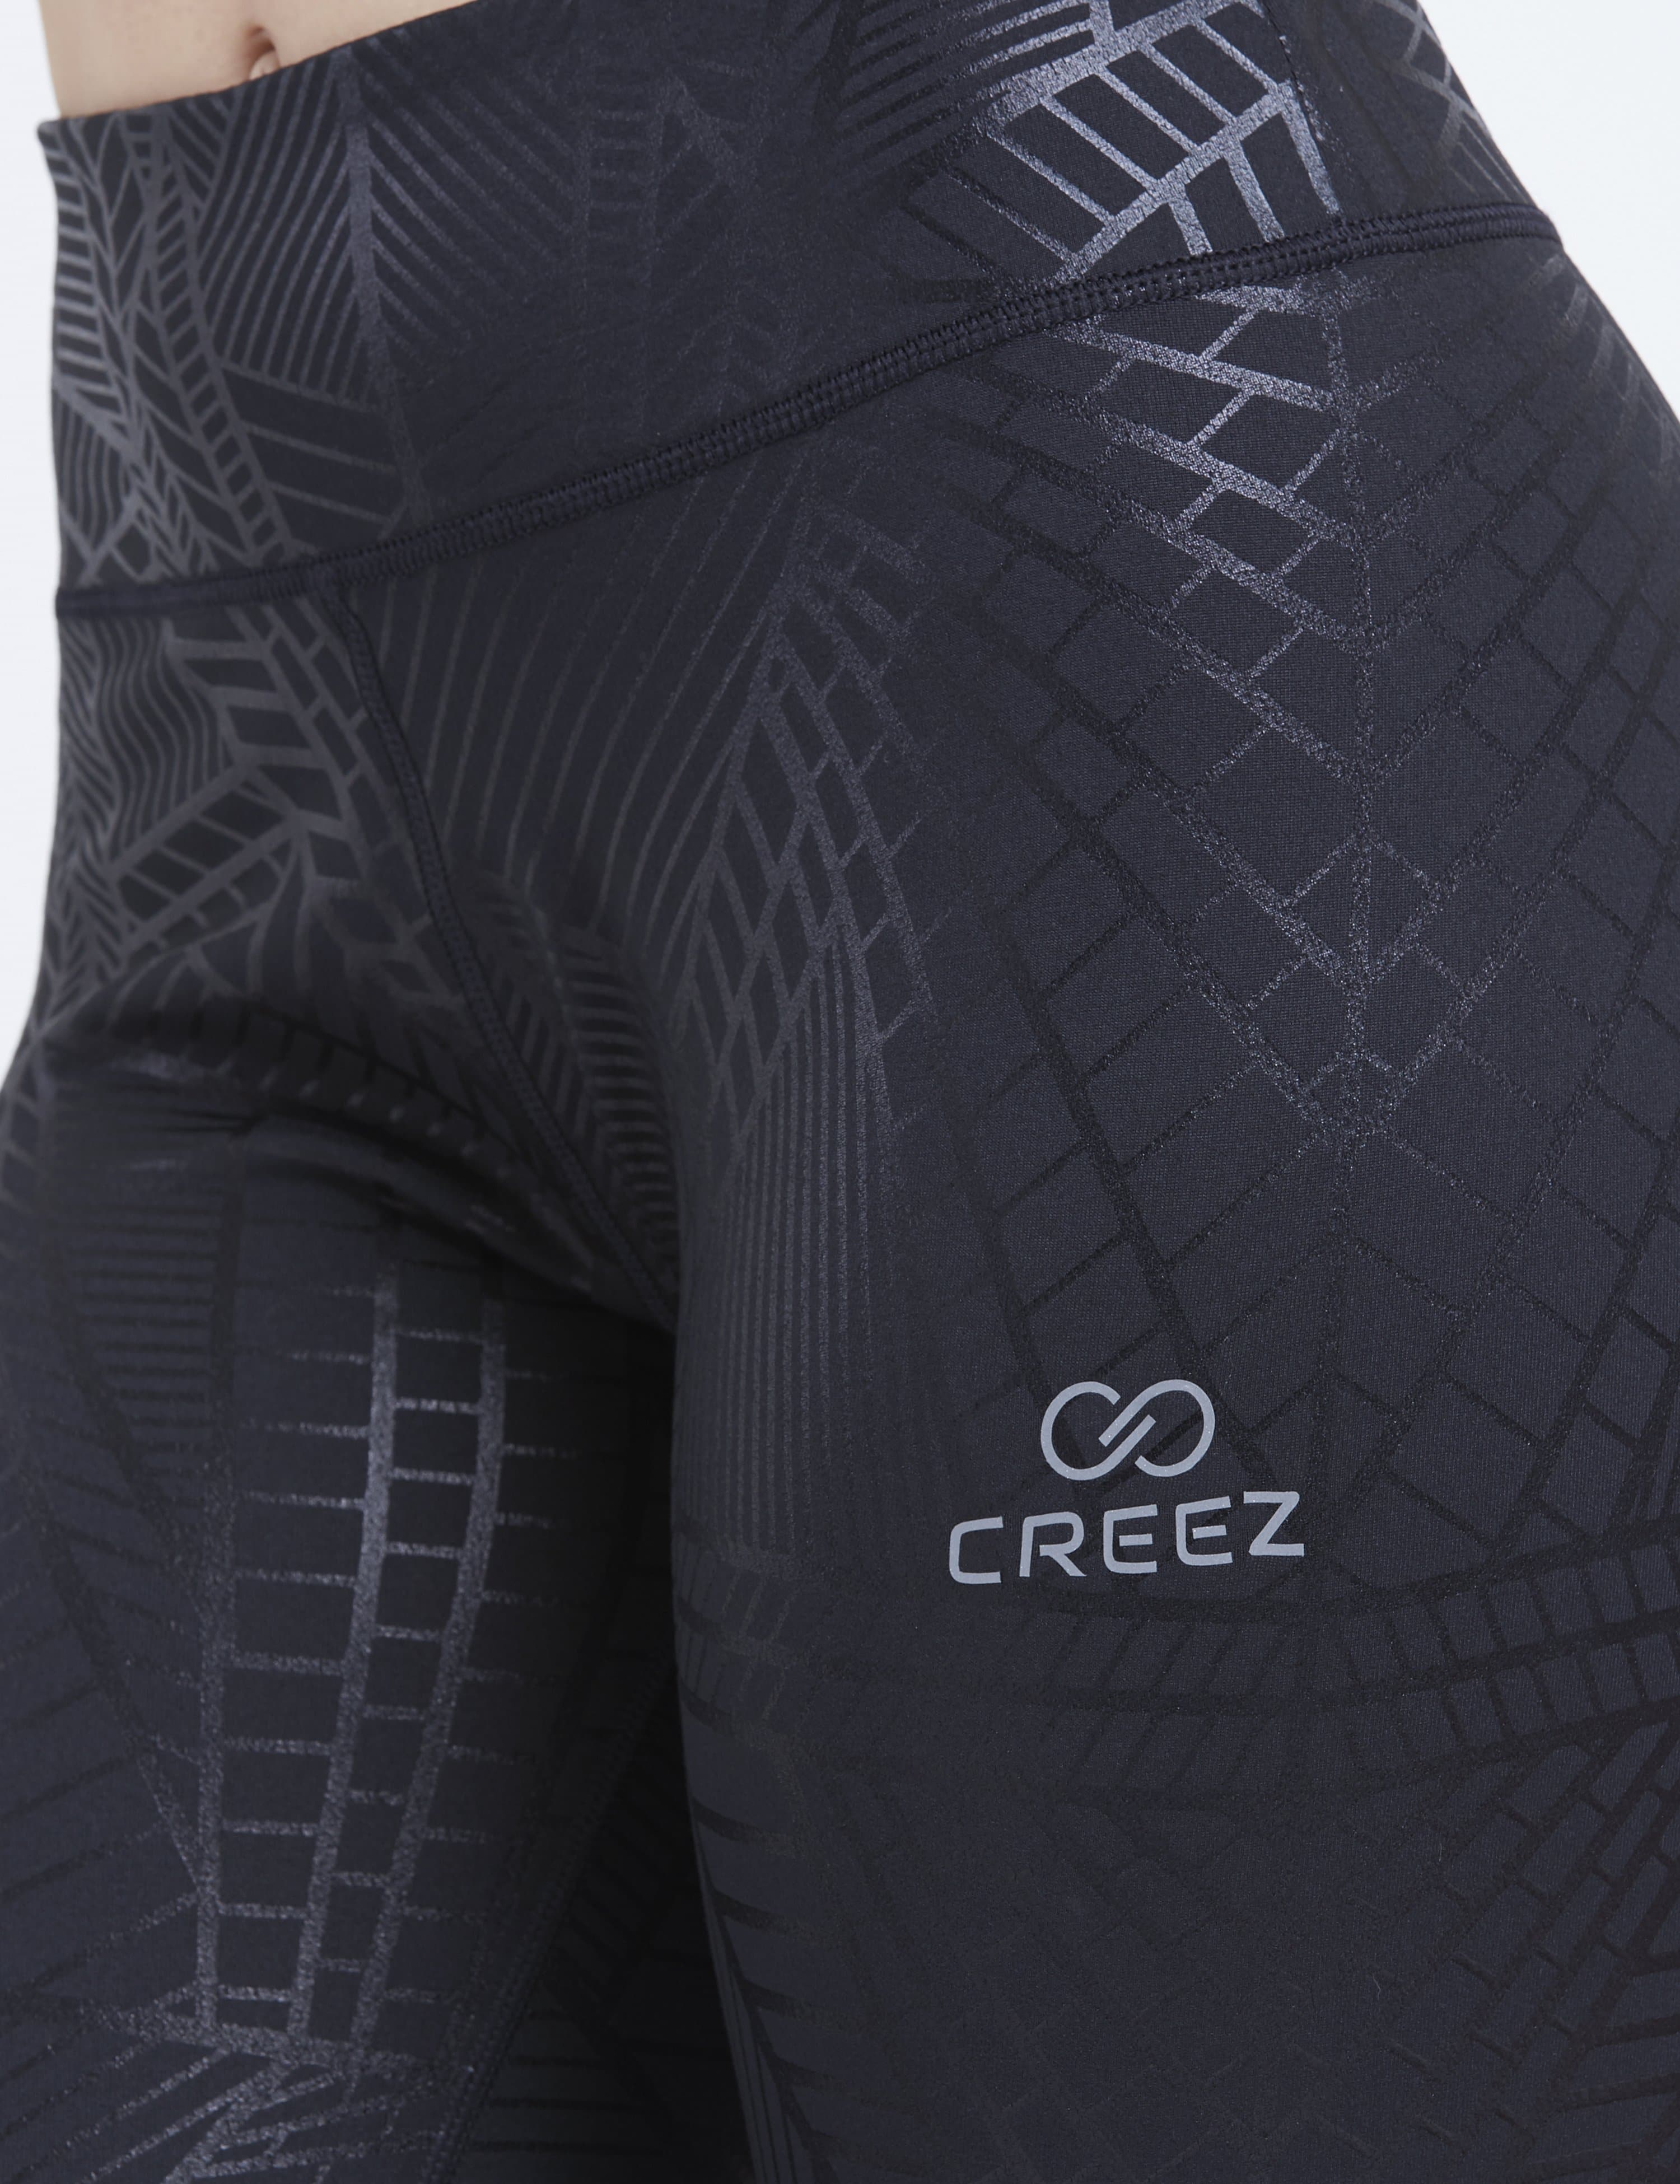 Creeluxe Spider Web Black Foil Printed Full Length Leggings